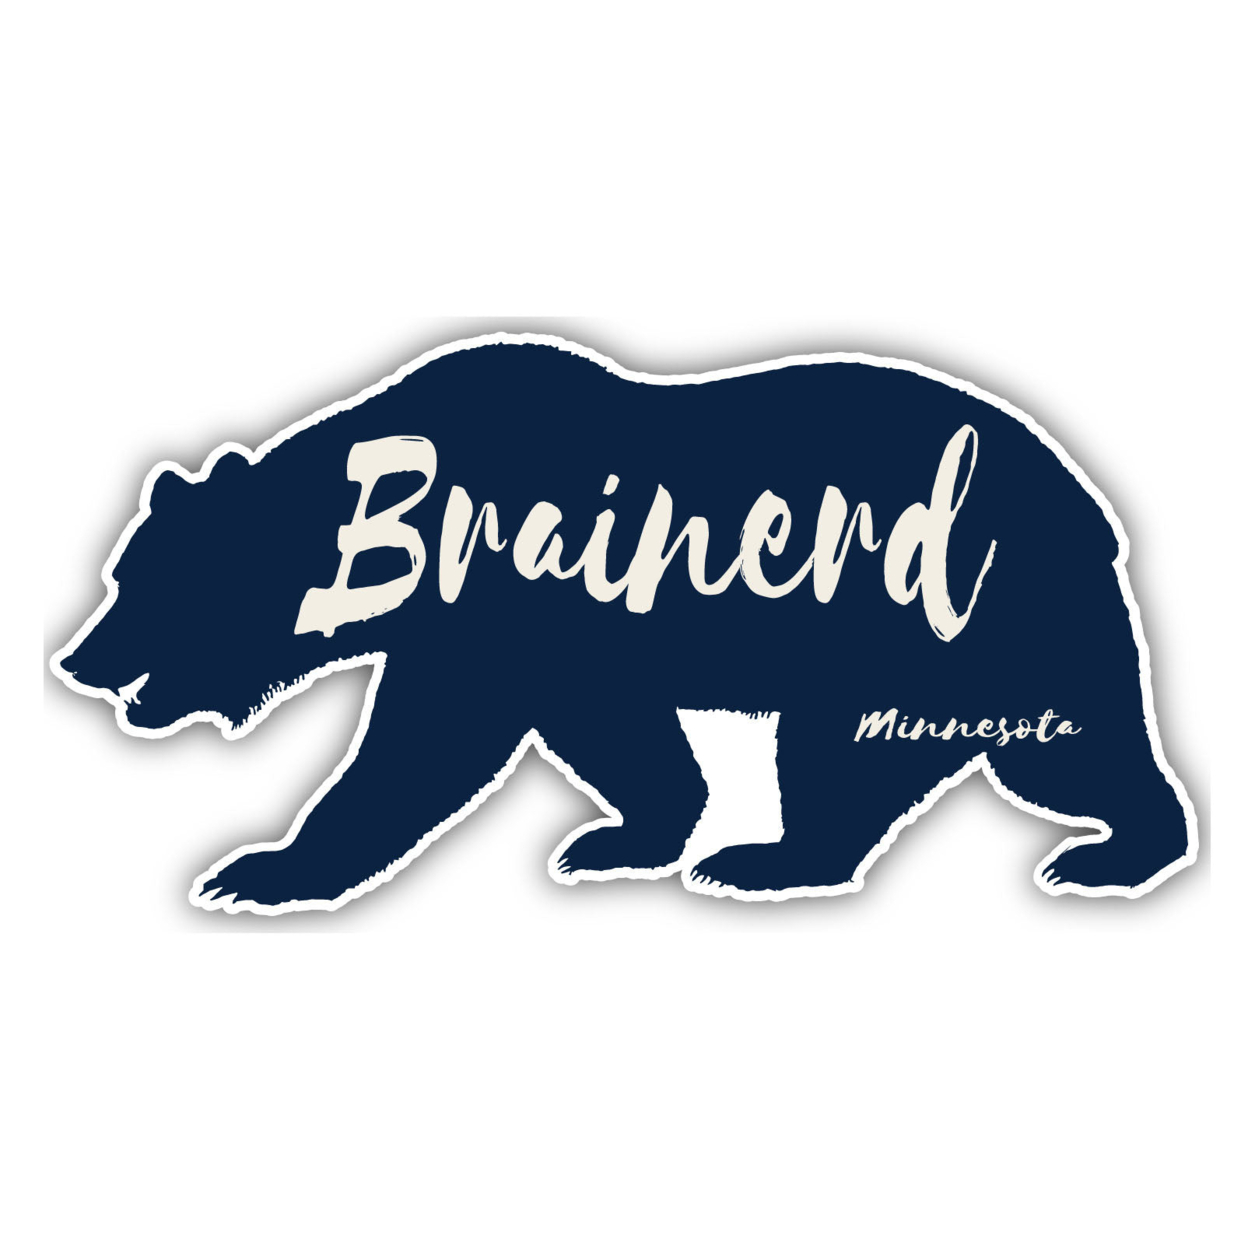 Brainerd Minnesota Souvenir Decorative Stickers (Choose Theme And Size) - 4-Pack, 2-Inch, Tent